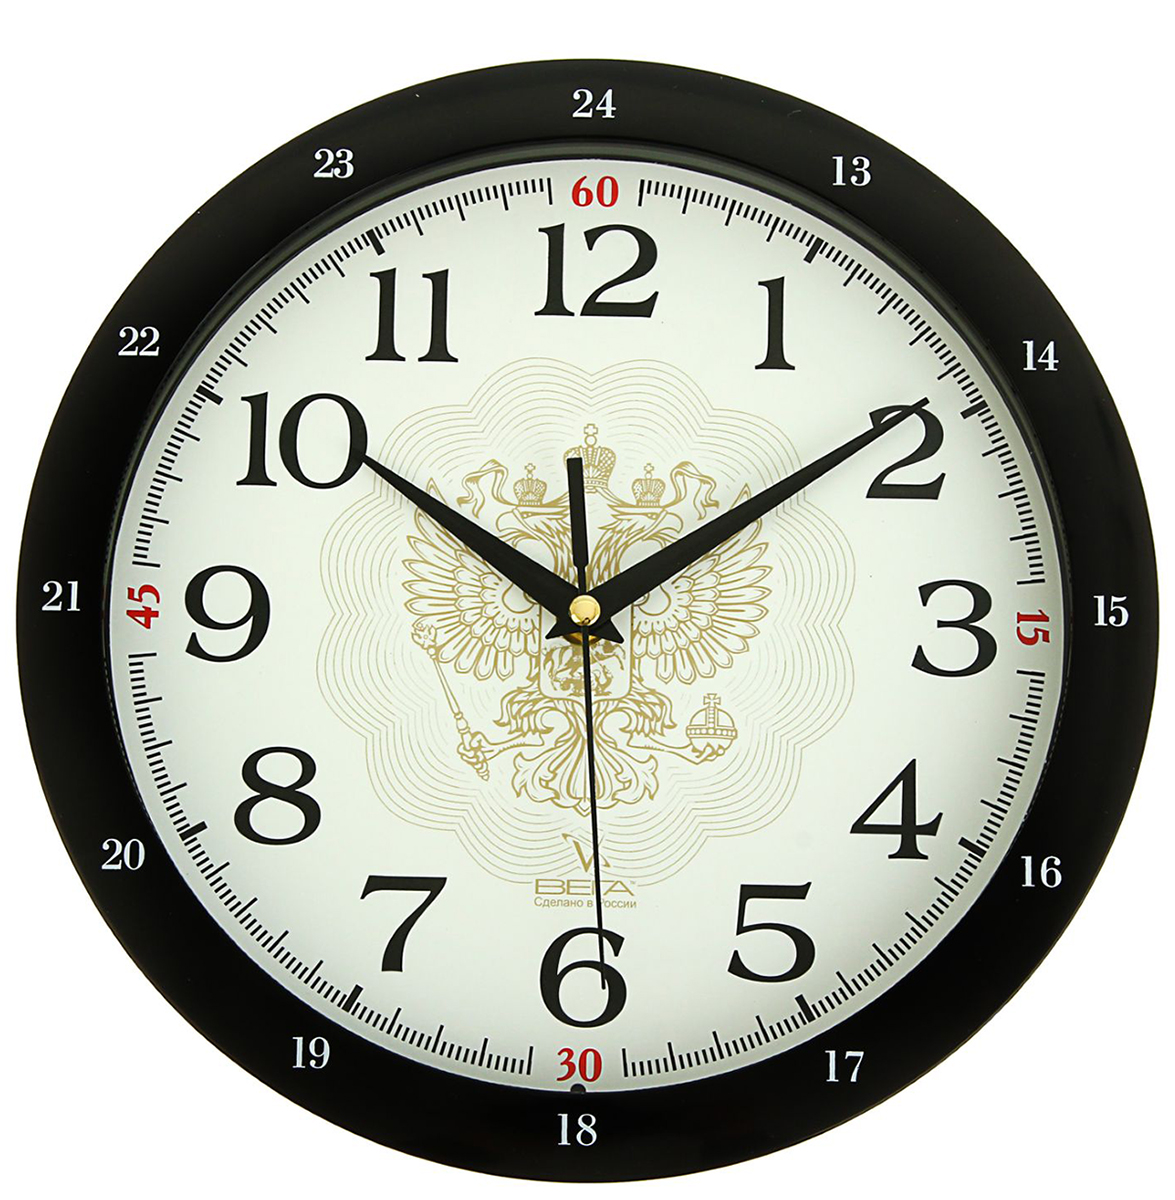 Настенные часы с минутами. Часы настенные Vigor д-30 флаг с гербом. Часы Vigor д-29 герб РФ. Часы Vigor д-24 нежность. Часы Vigor д-24 классика белая.